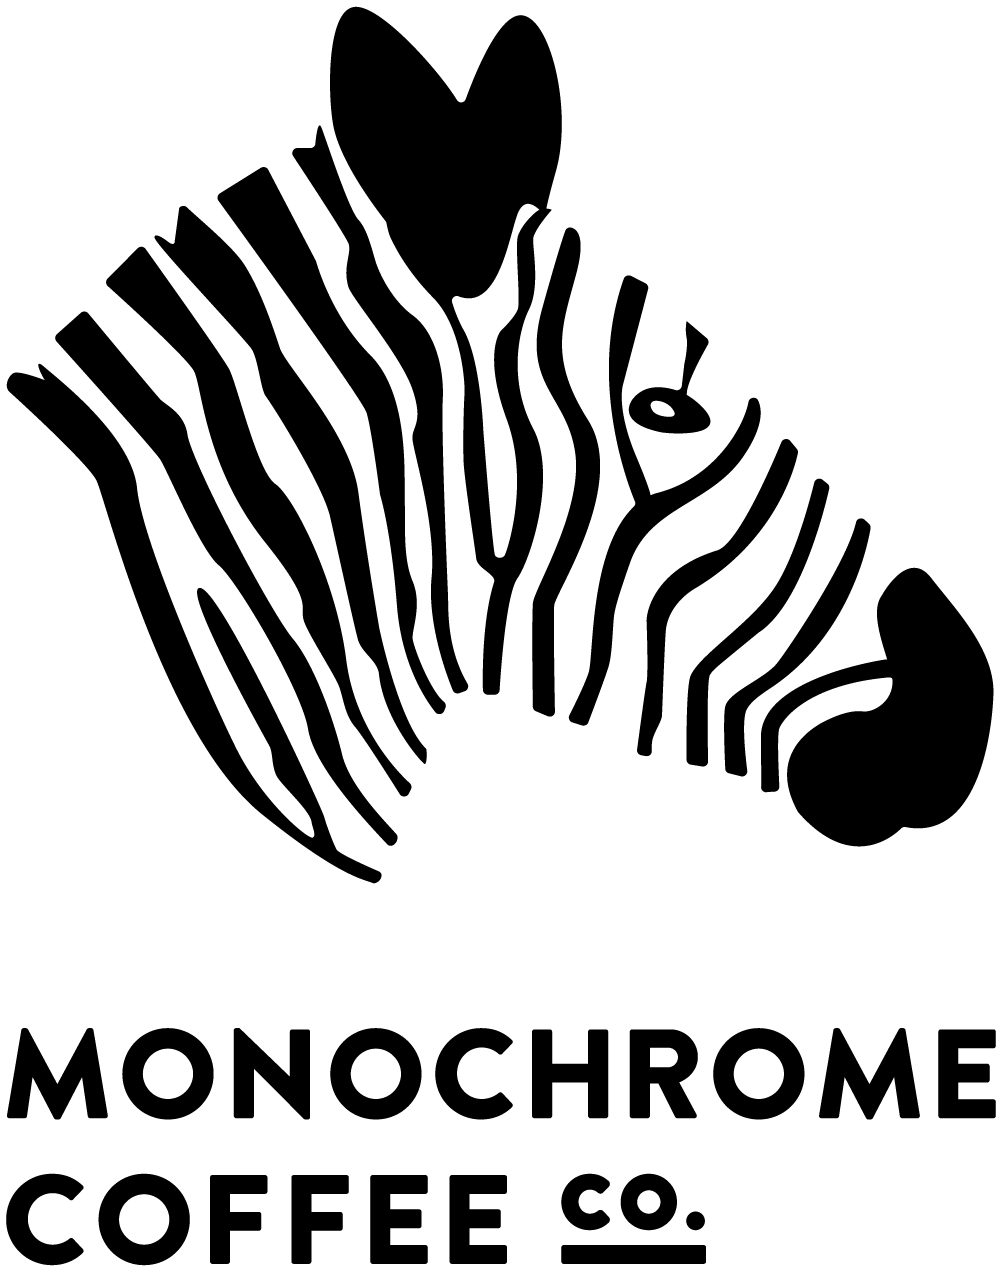 Coffee Company Logo - Monochrome Coffee Co. A social enterprise coffee company